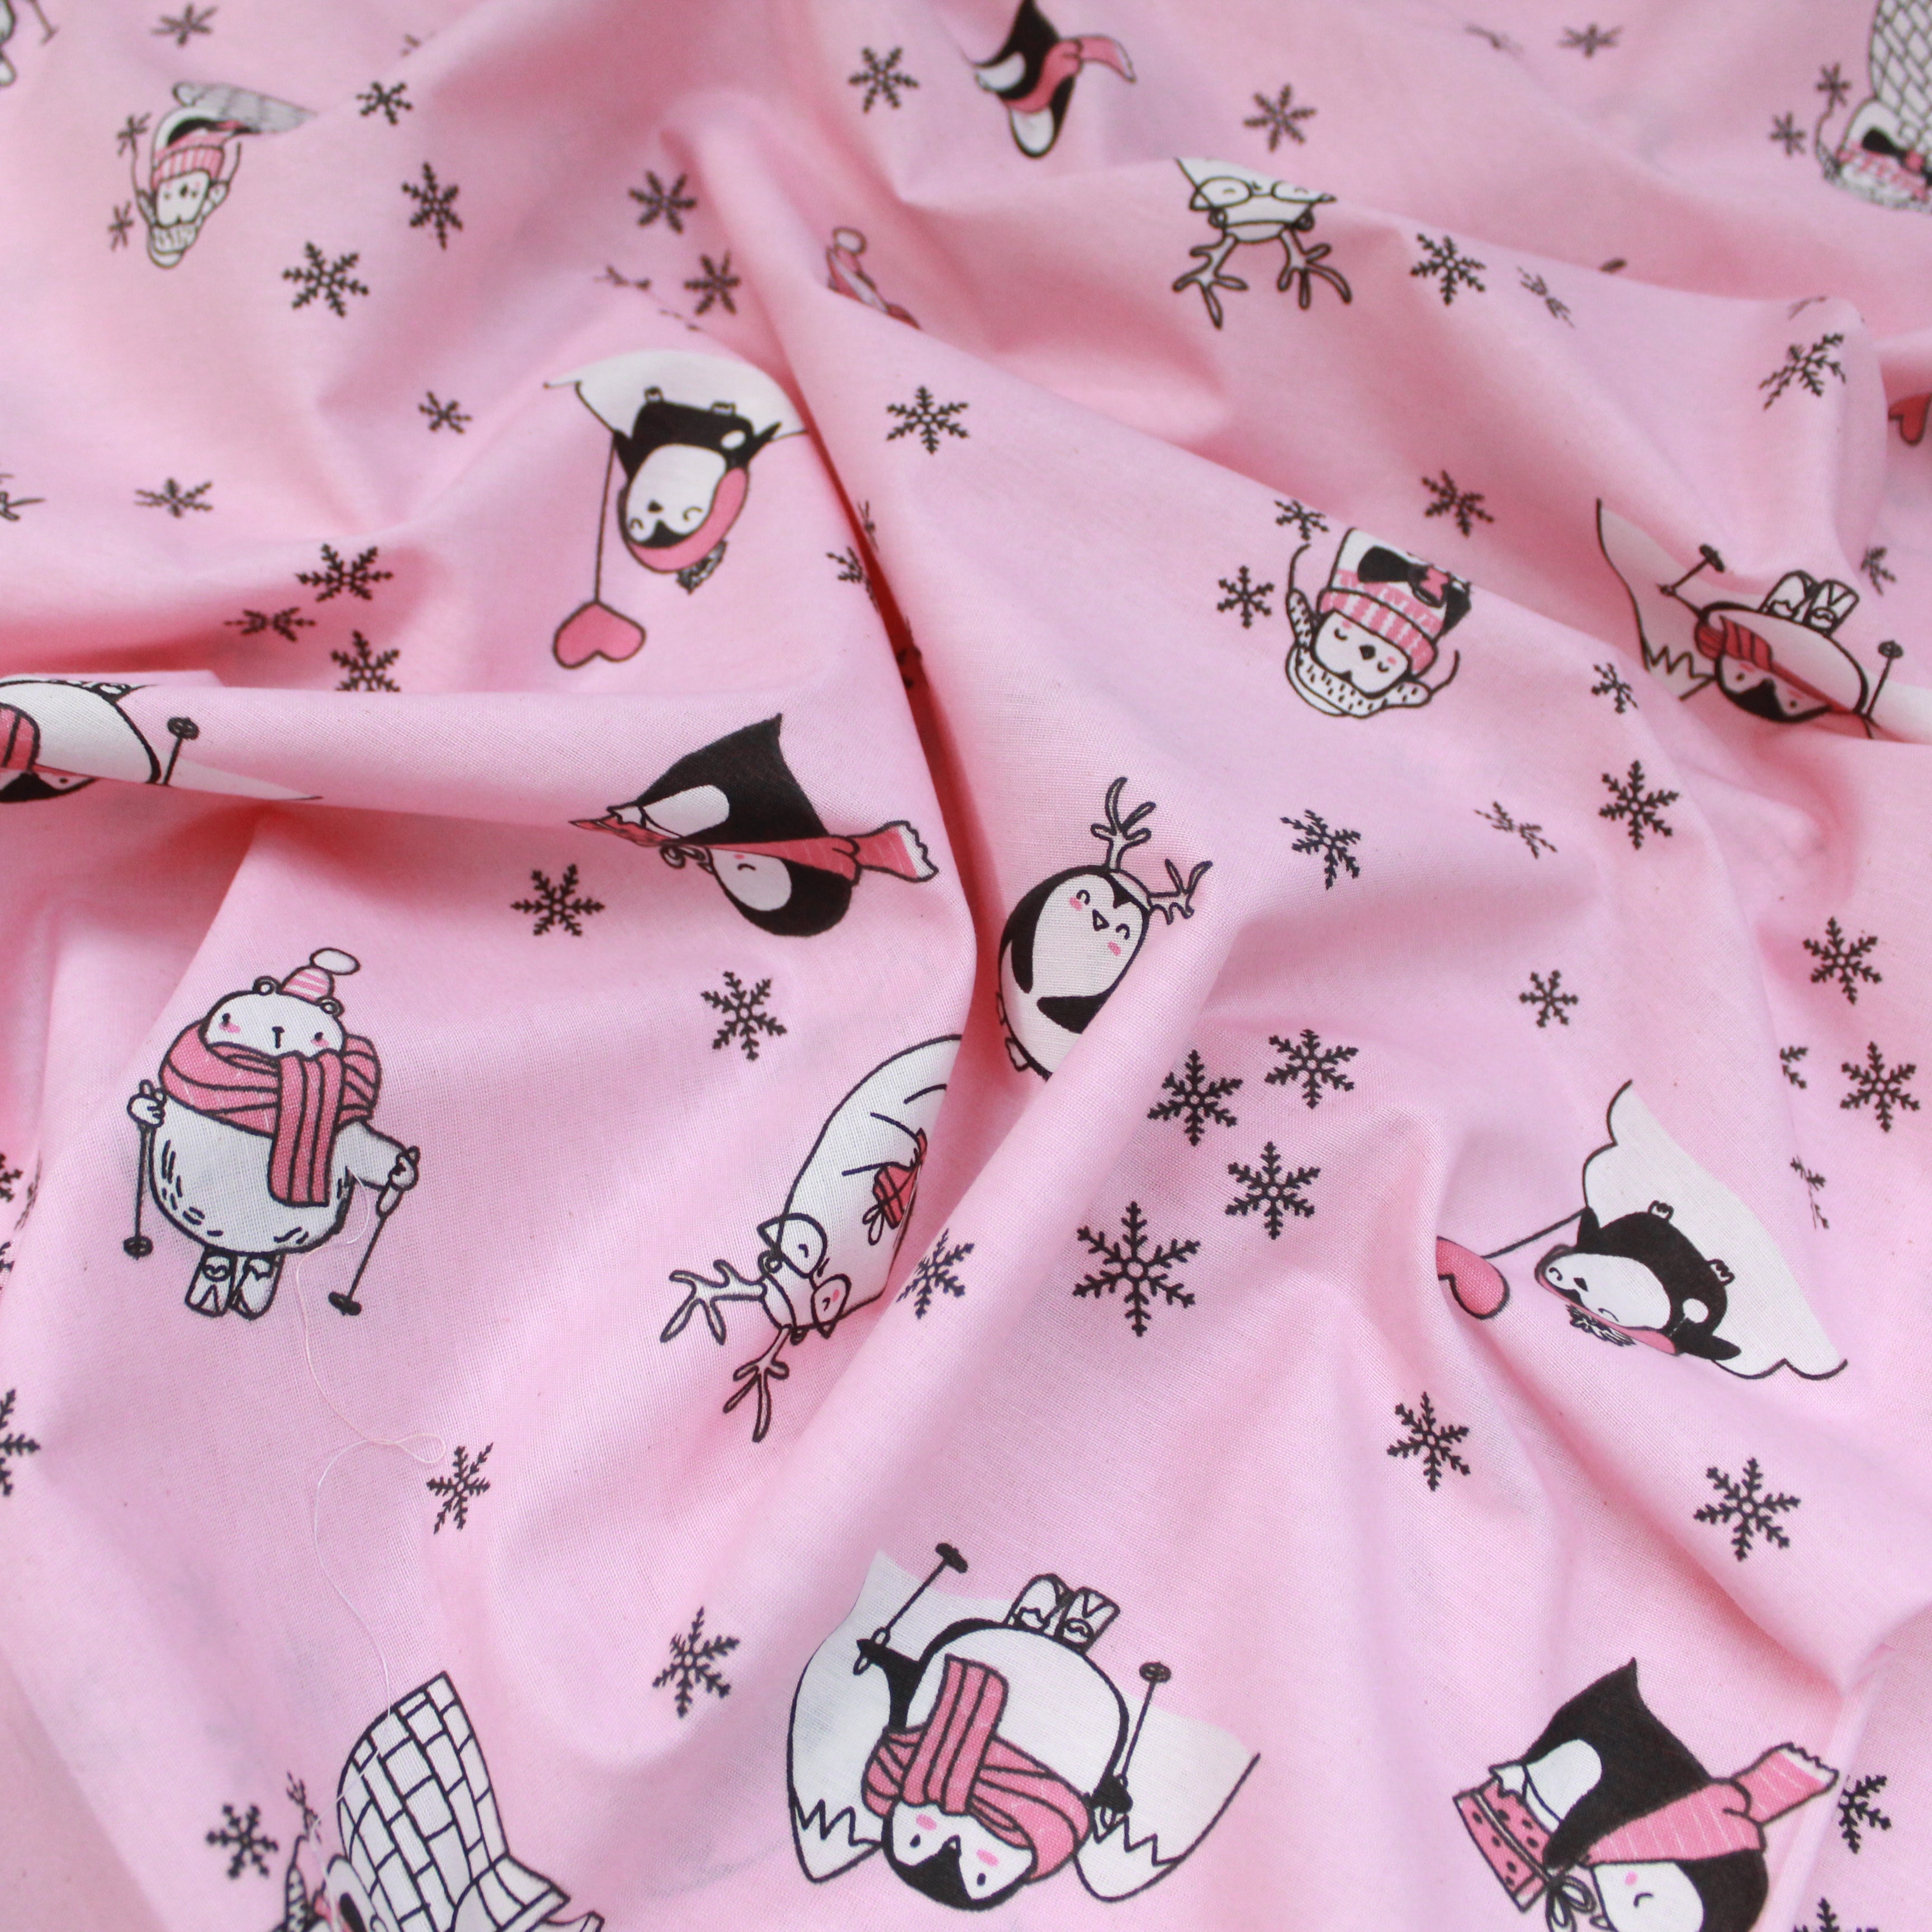 Premium Quality Super Wide Cotton Blend Sheeting "Penguins" 94" Wide Pink